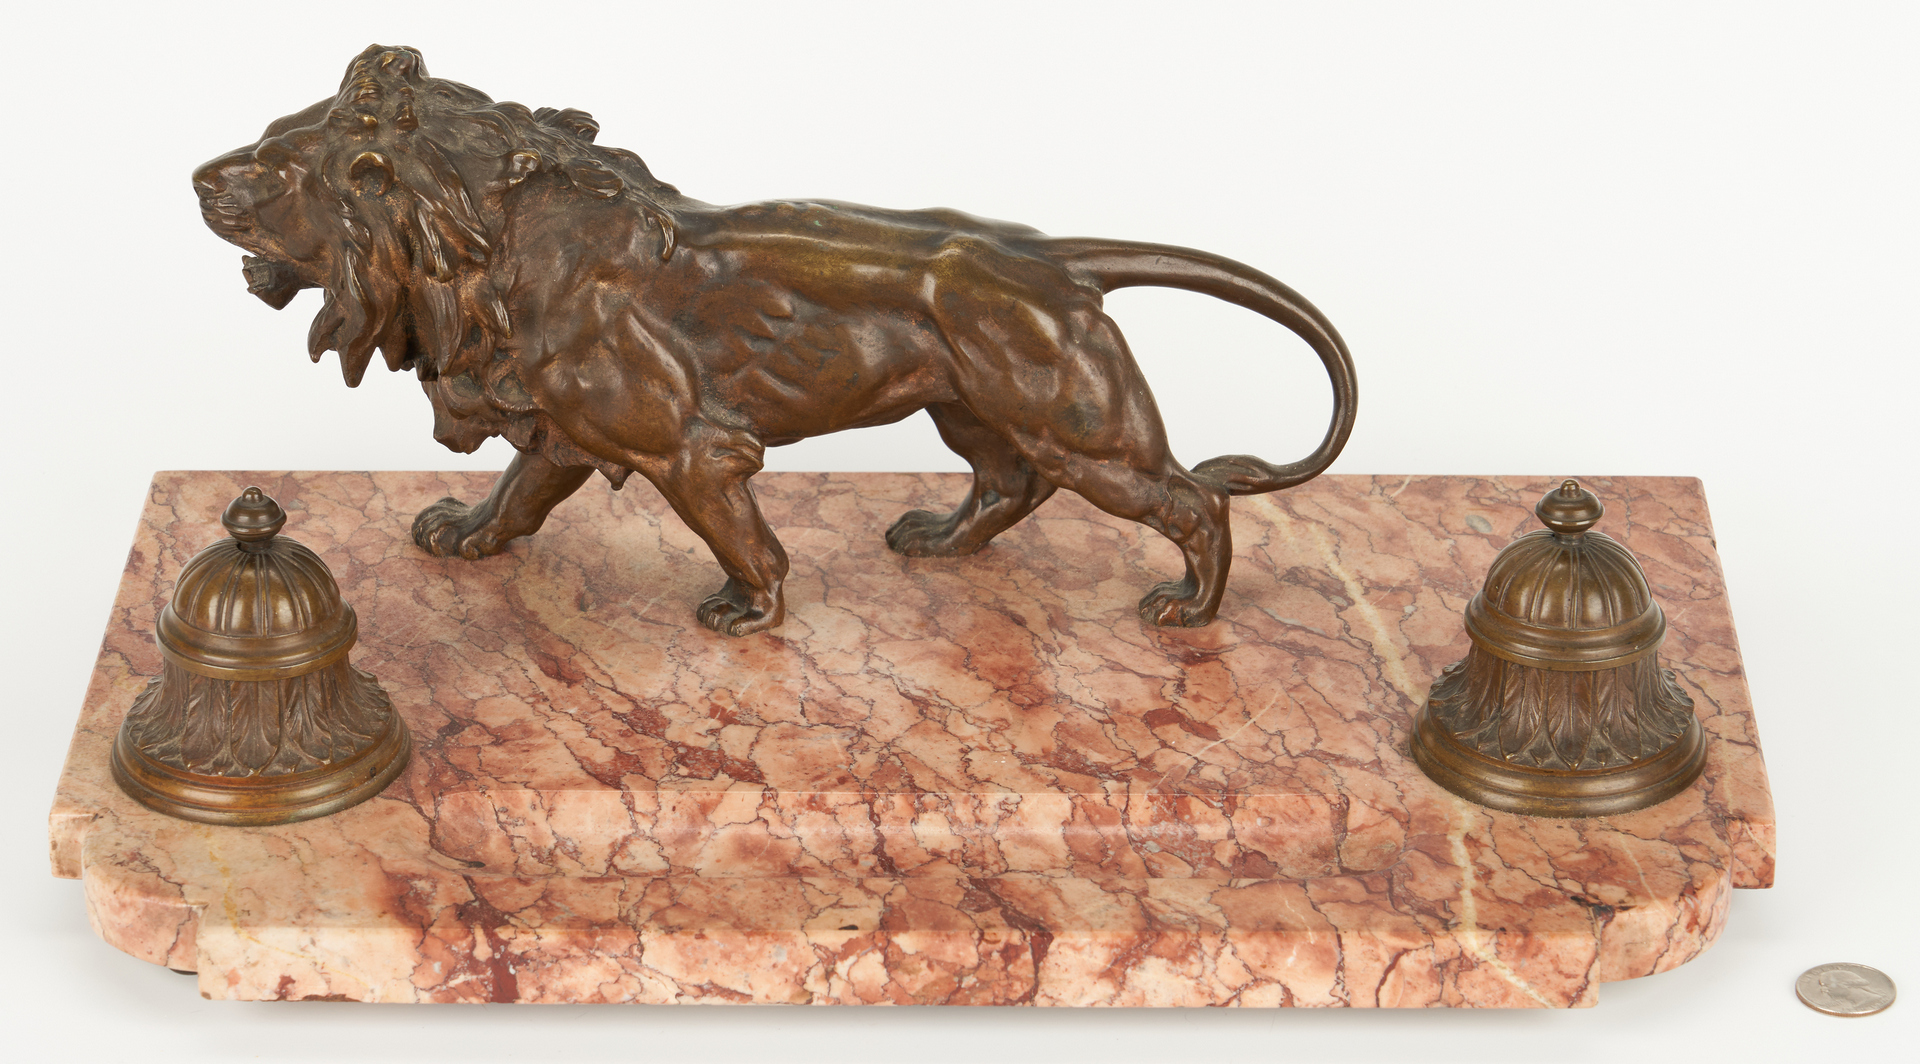 Lot 101: Inkstand with Bronze Lion Plus Candelabra